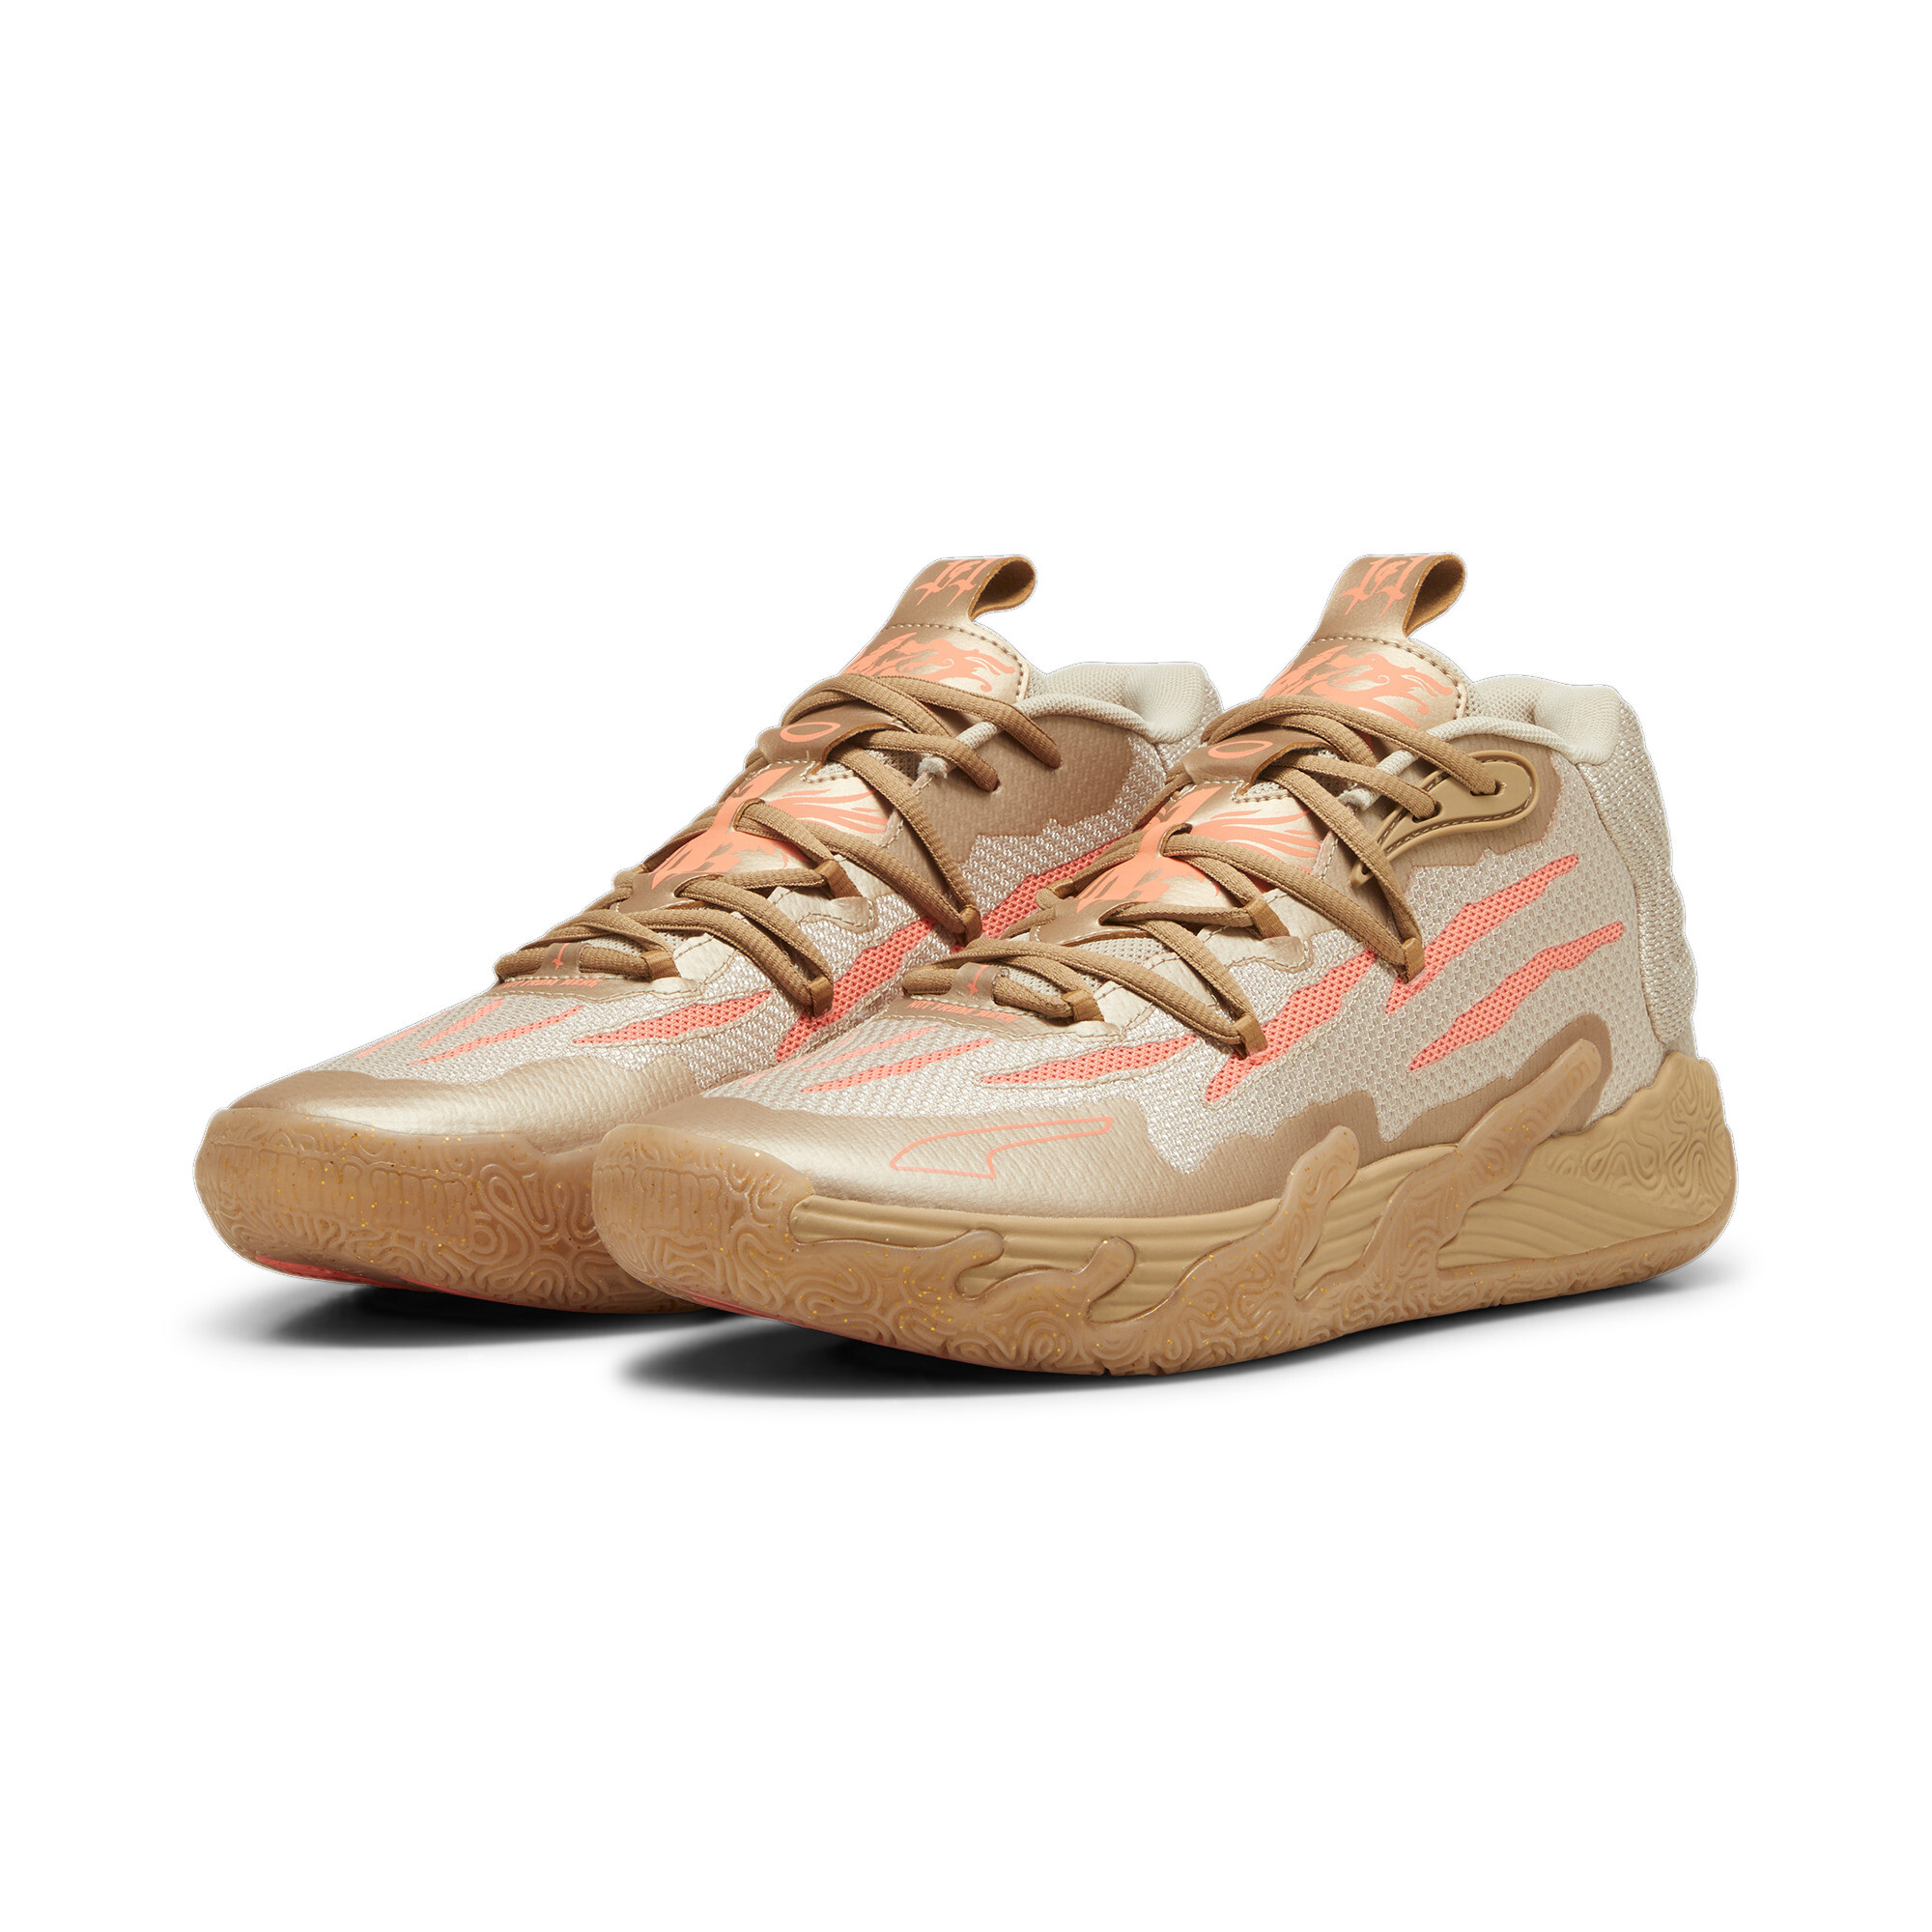 Puma MB.03 CNY Basketball Shoes, Gold, Size 51, Shoes